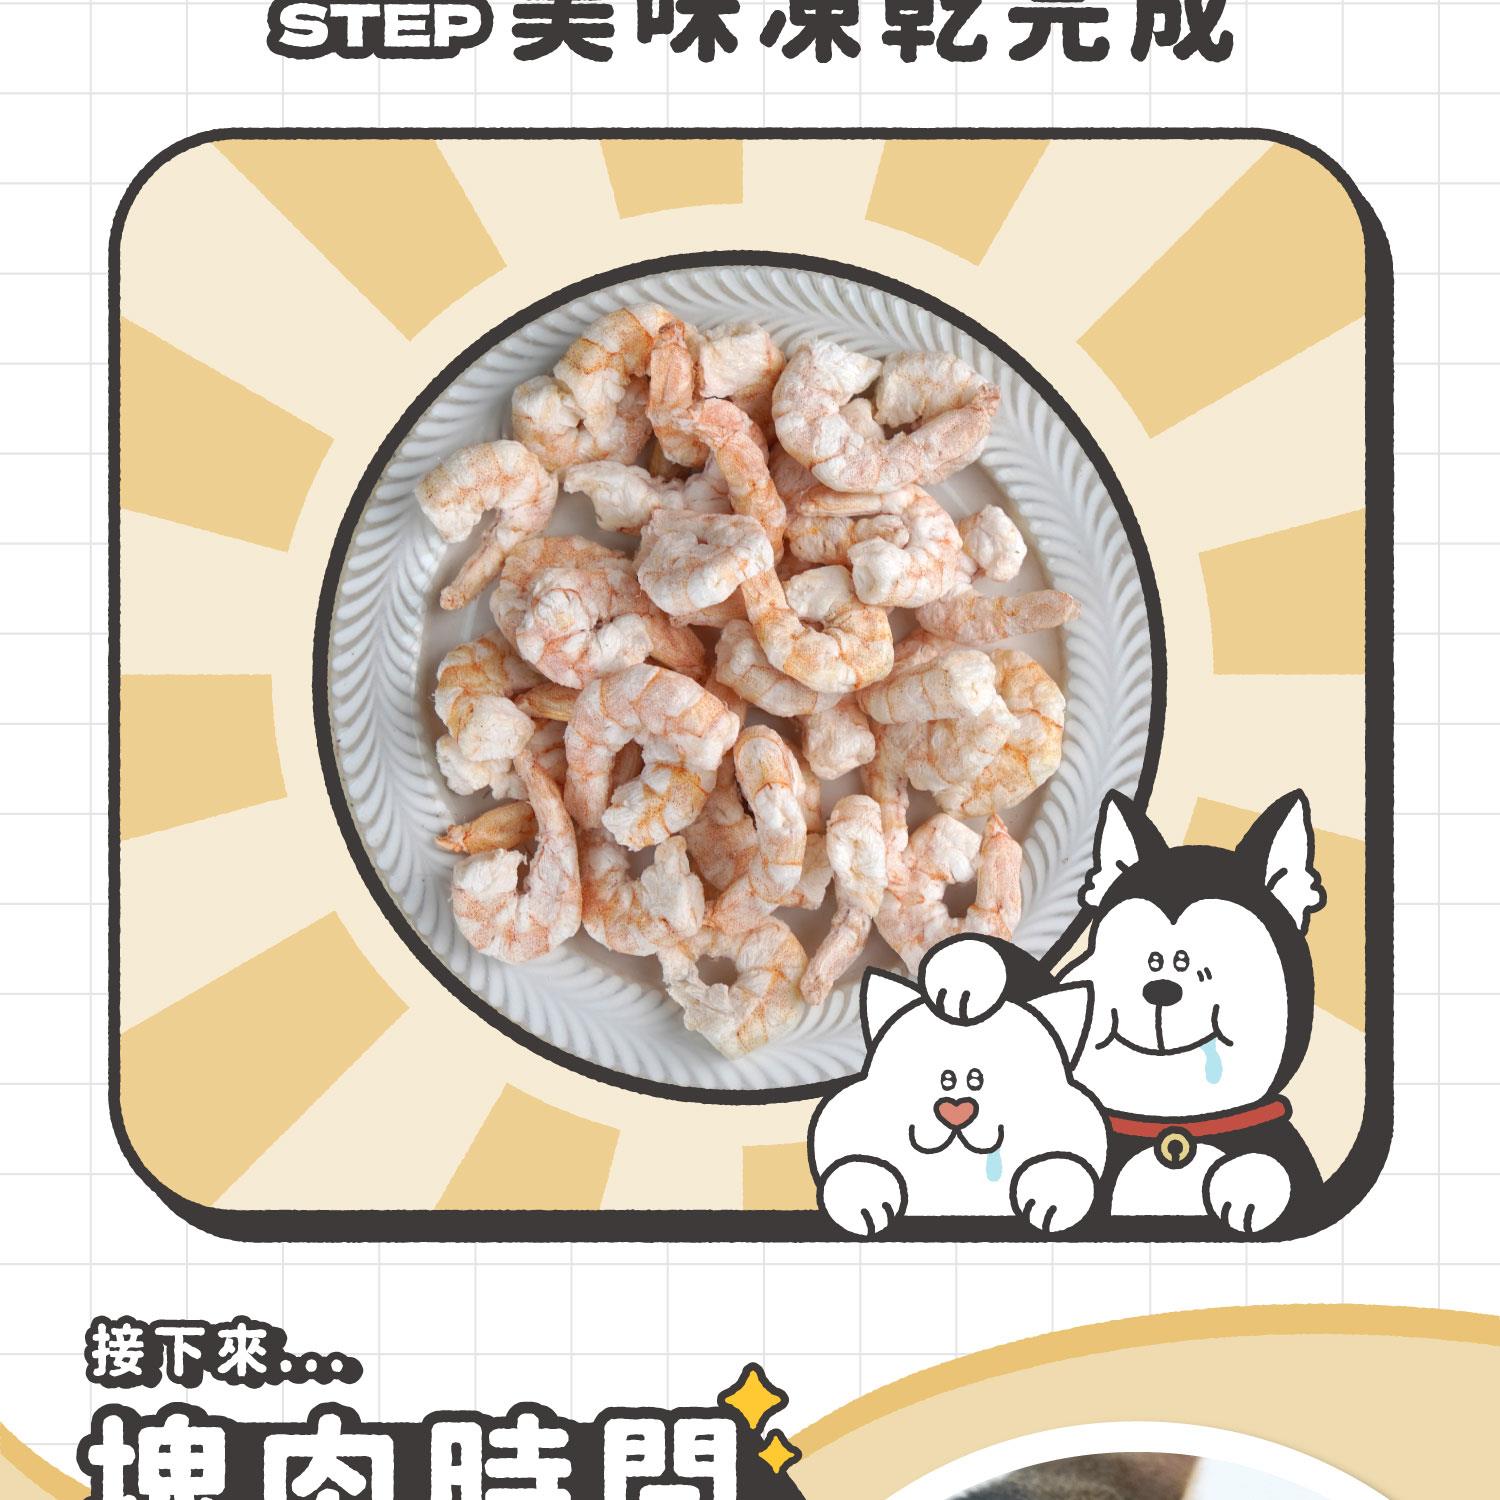 nu-treat-shrimp-intro5.jpg